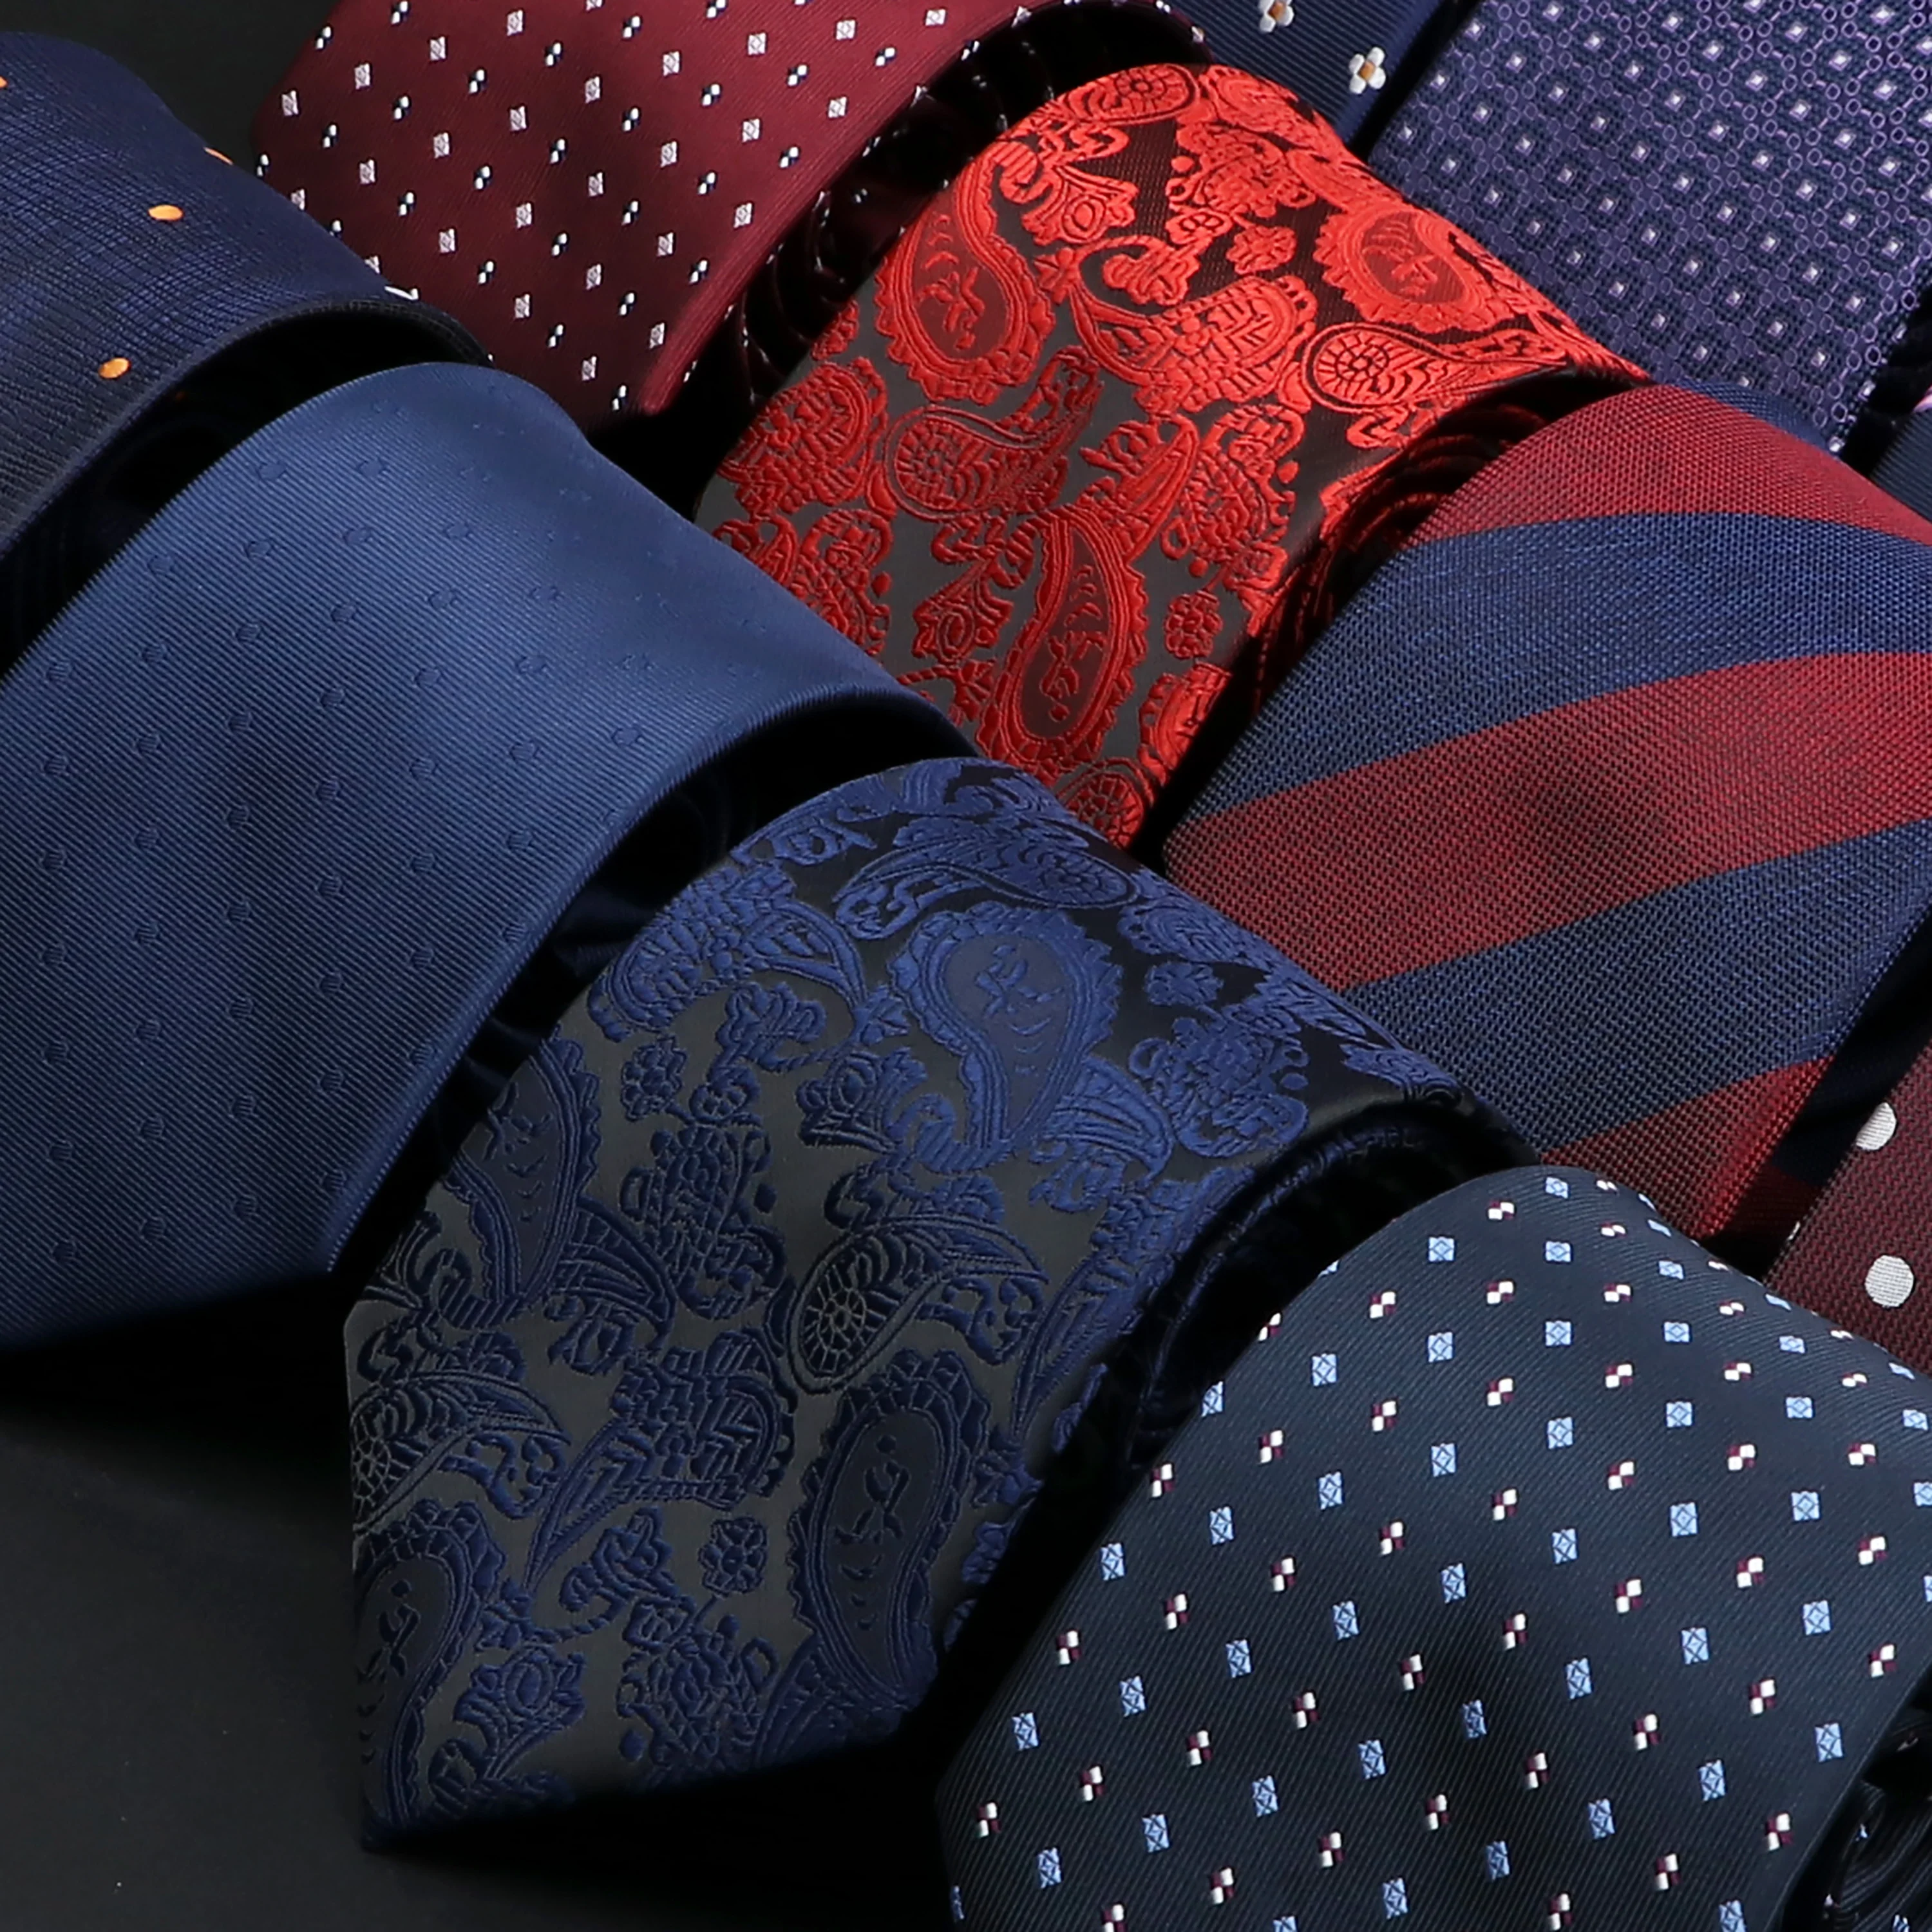 

Men's Fashion Tie 8cm Blue Necktie Classic Plaid Striped Neck Tie Paisley Floral Neckties Daily Wear Cravat Wedding Party Gift